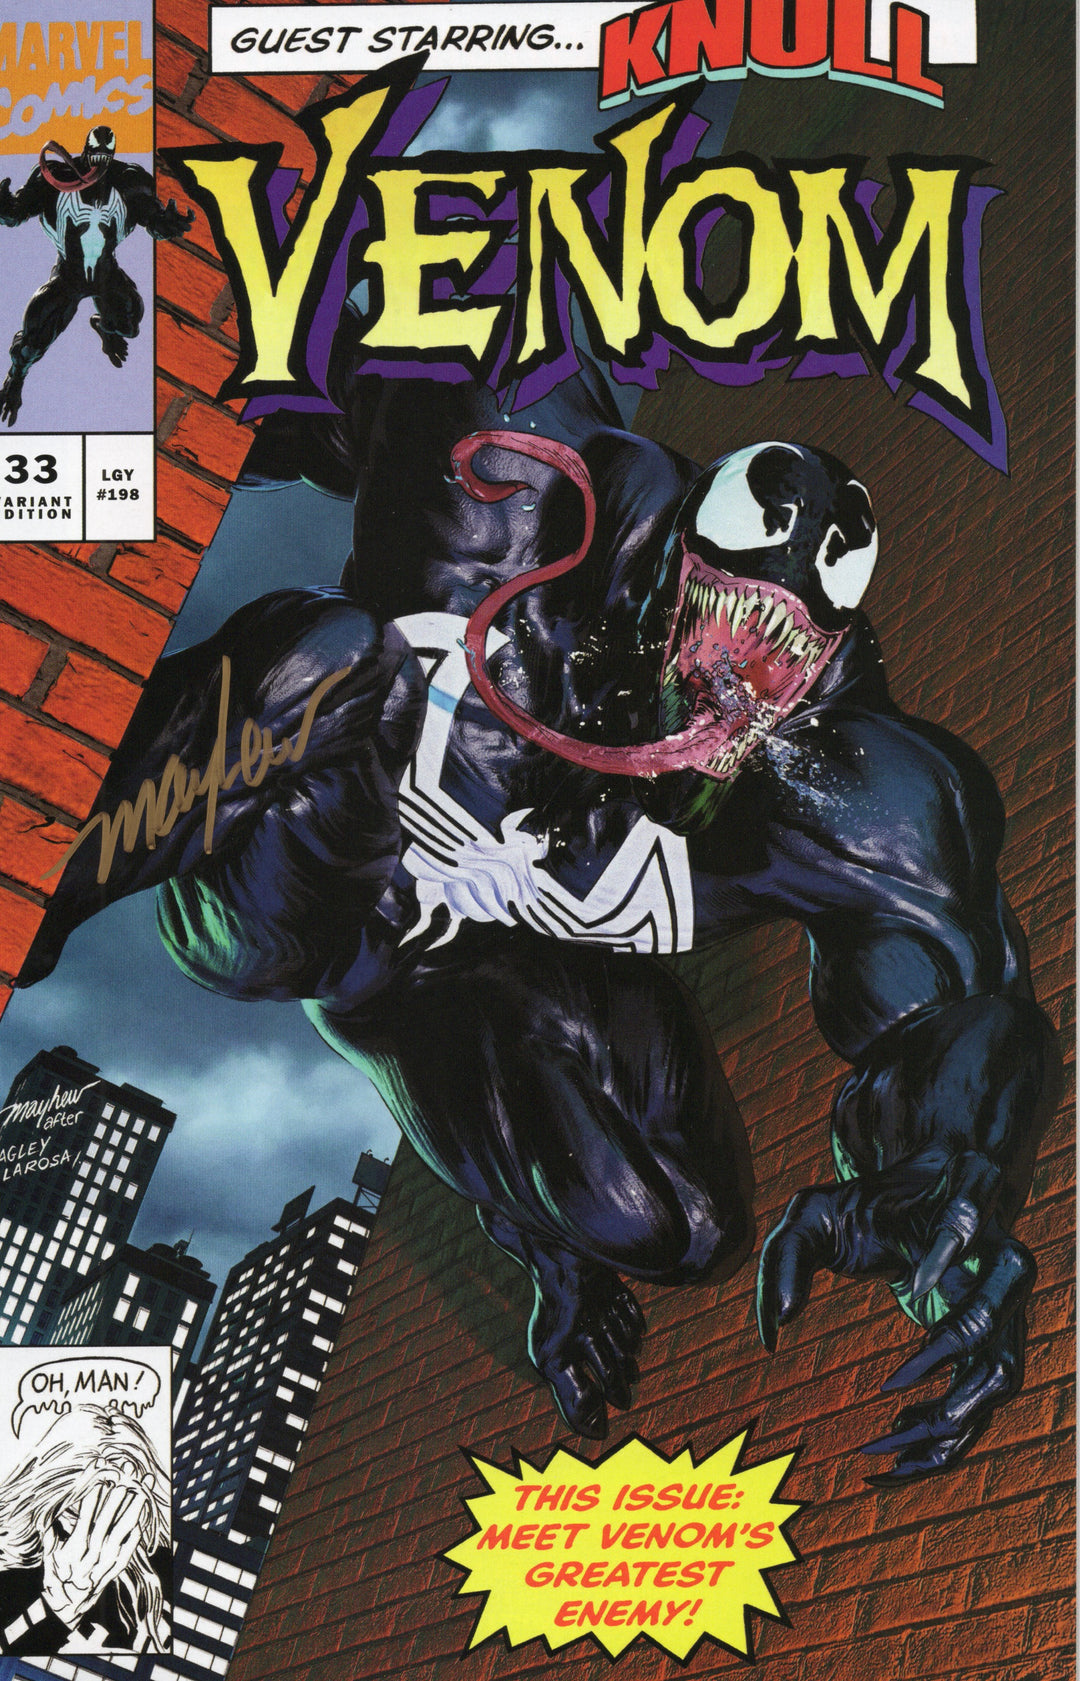 Venom #33, Lgy 198, signed by Mike Mayhew w/ COA